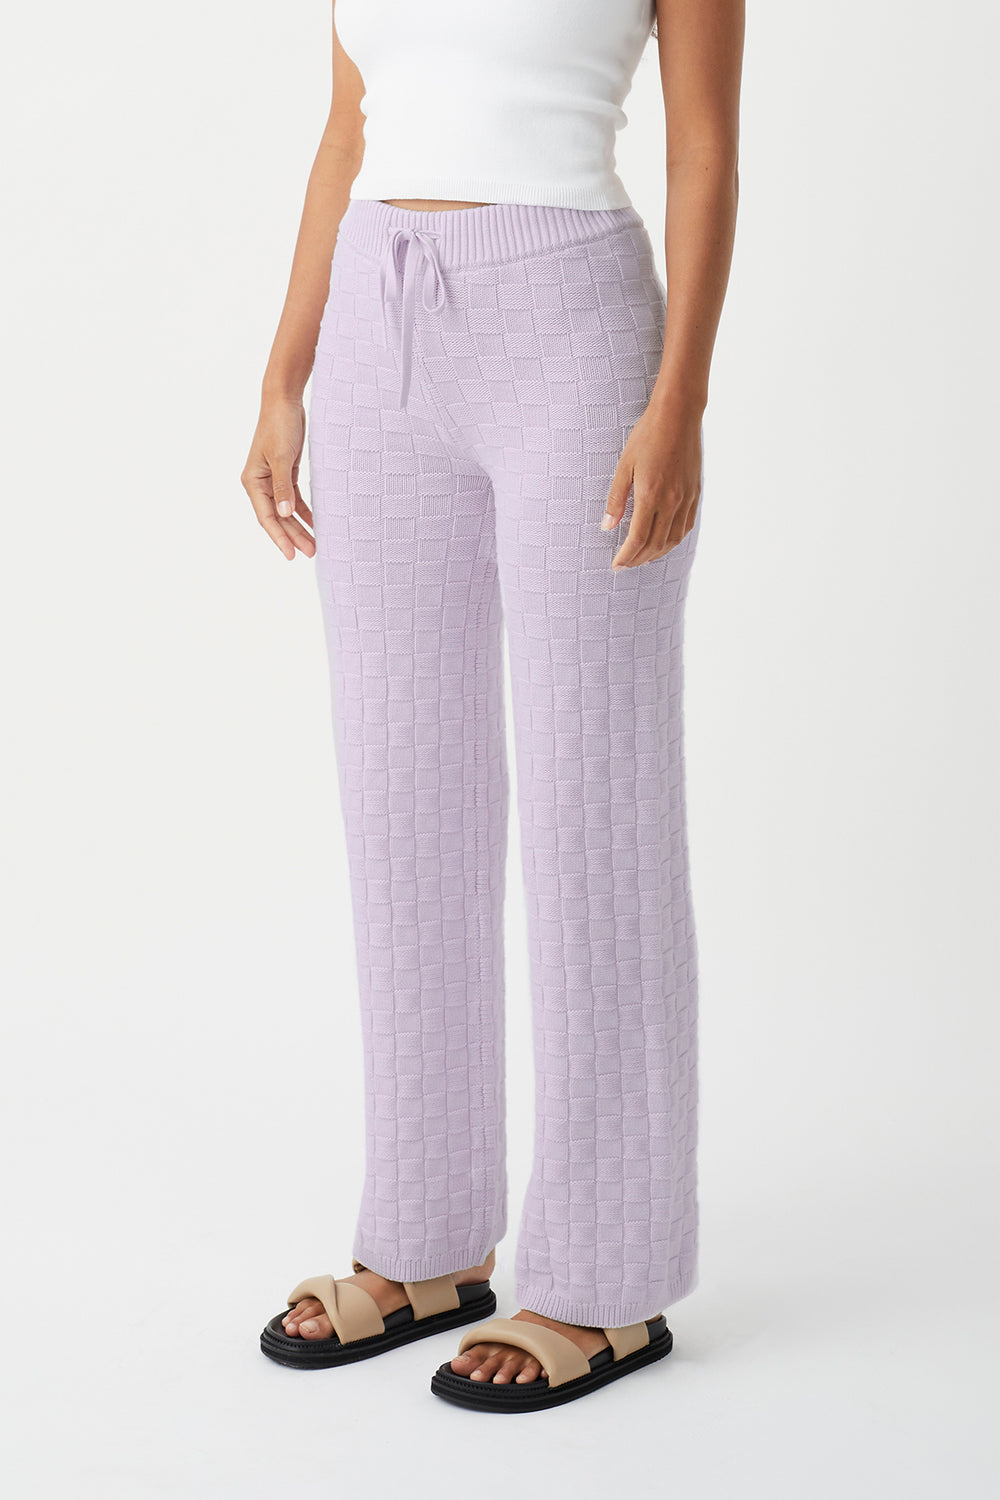 Sierra Organic Knit Pant